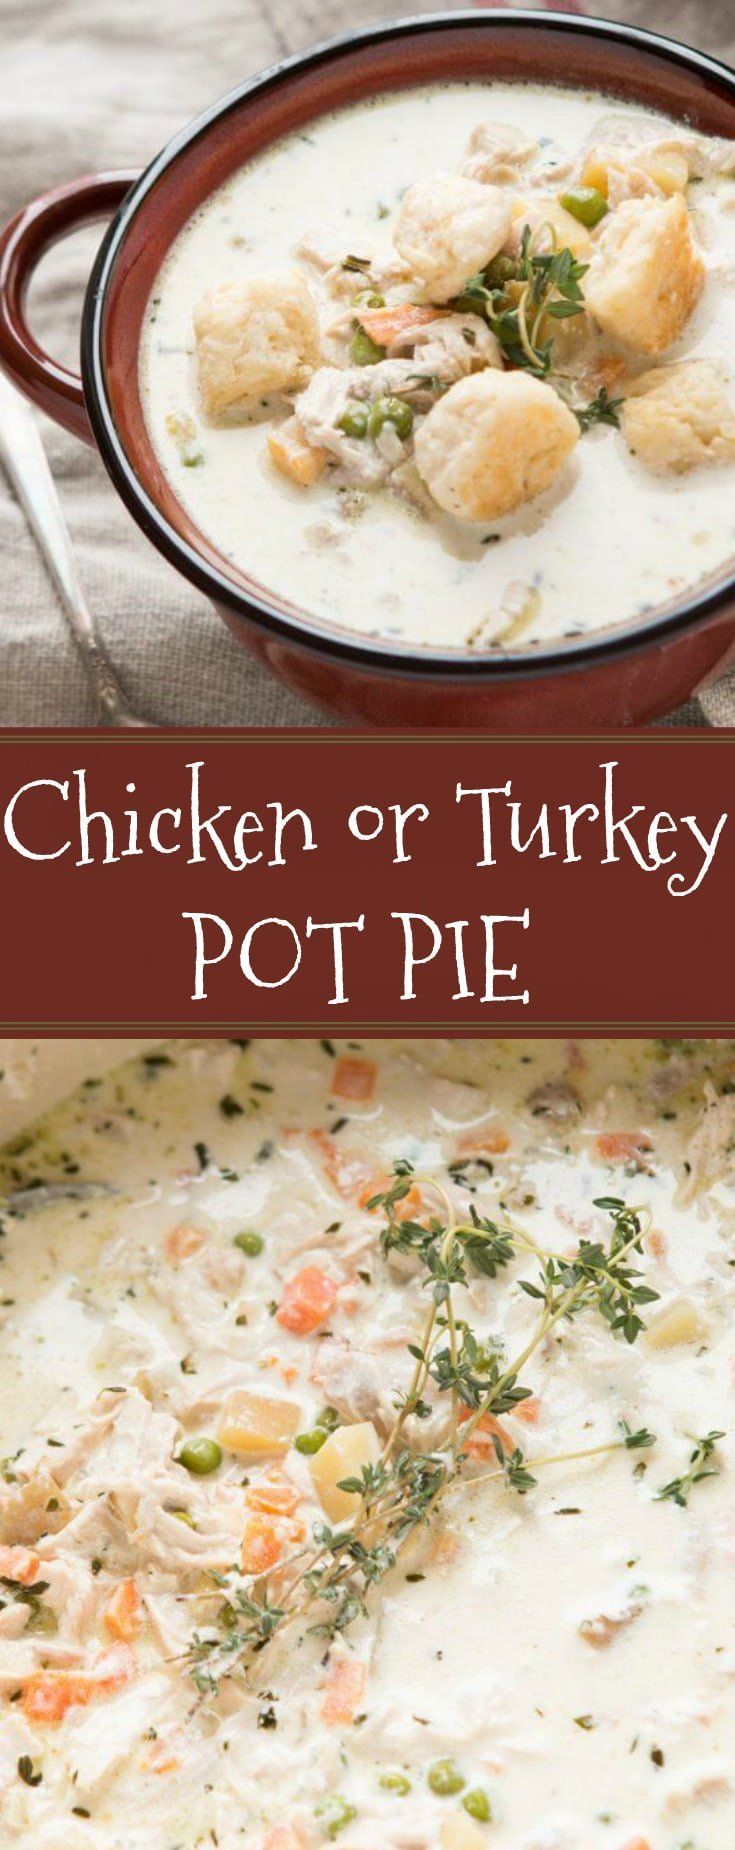 18 turkey pot pie soup crockpot ideas